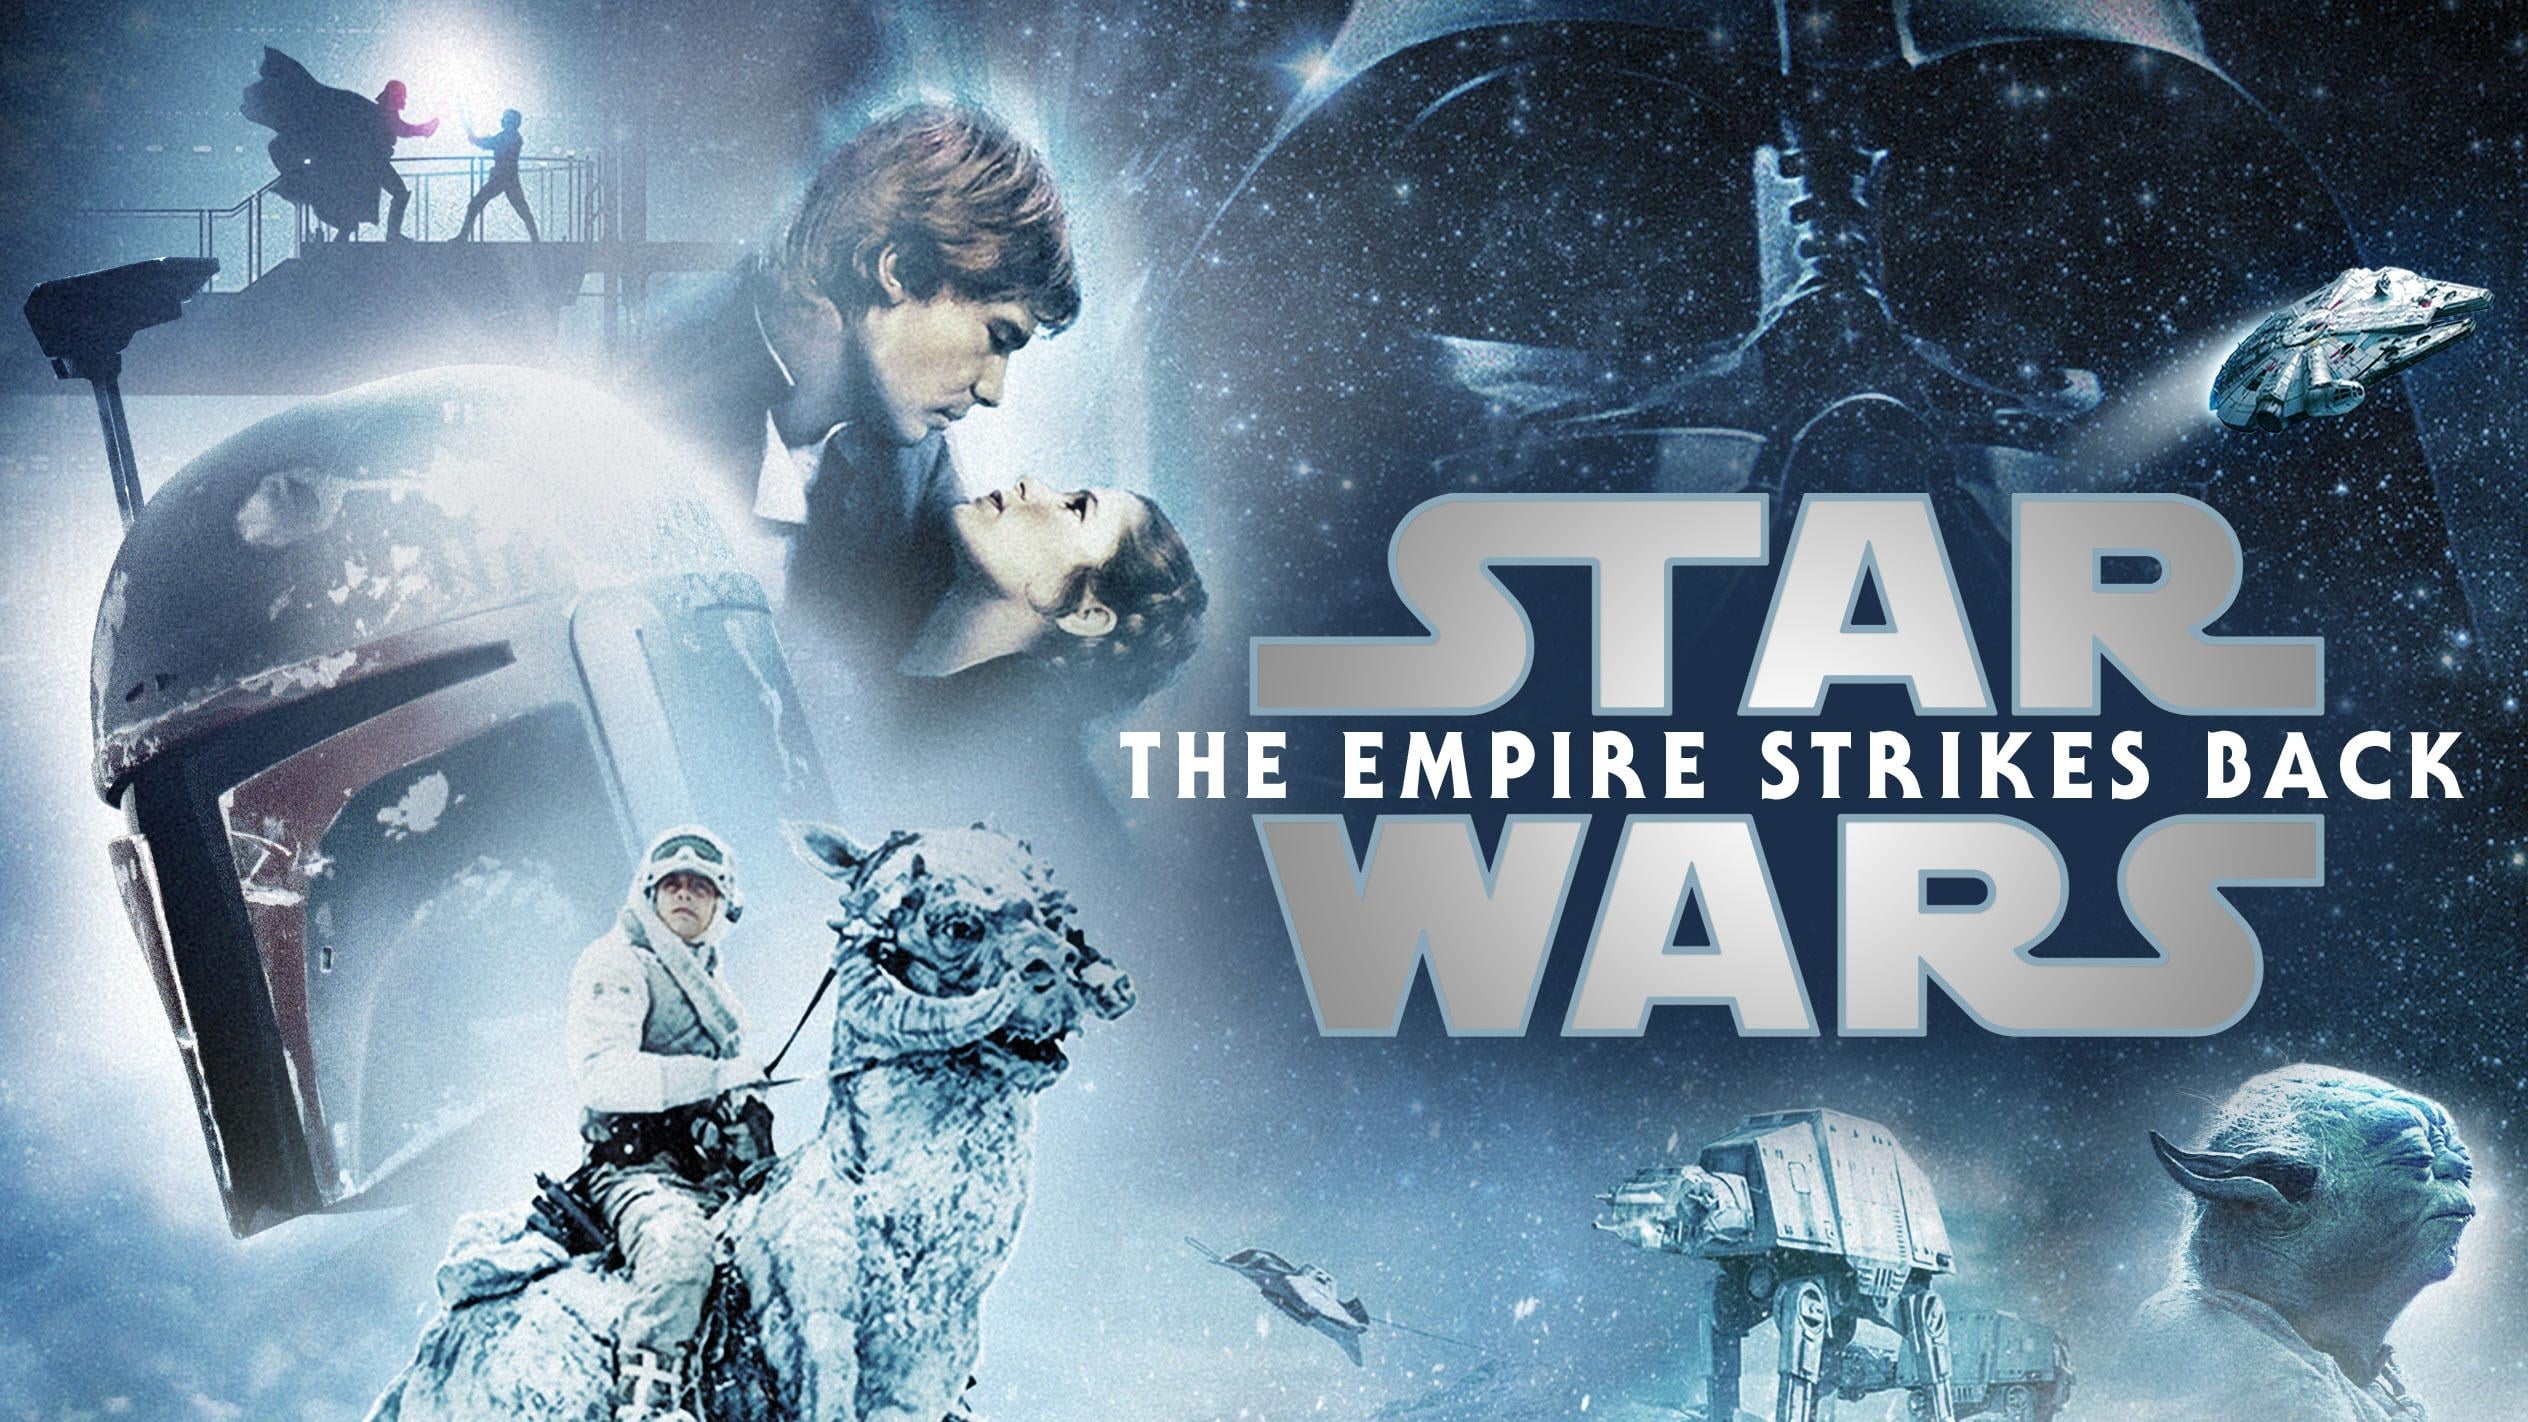 Star Wars The Empire Strikes Back  The empire strikes back Star wars Back  wallpaper